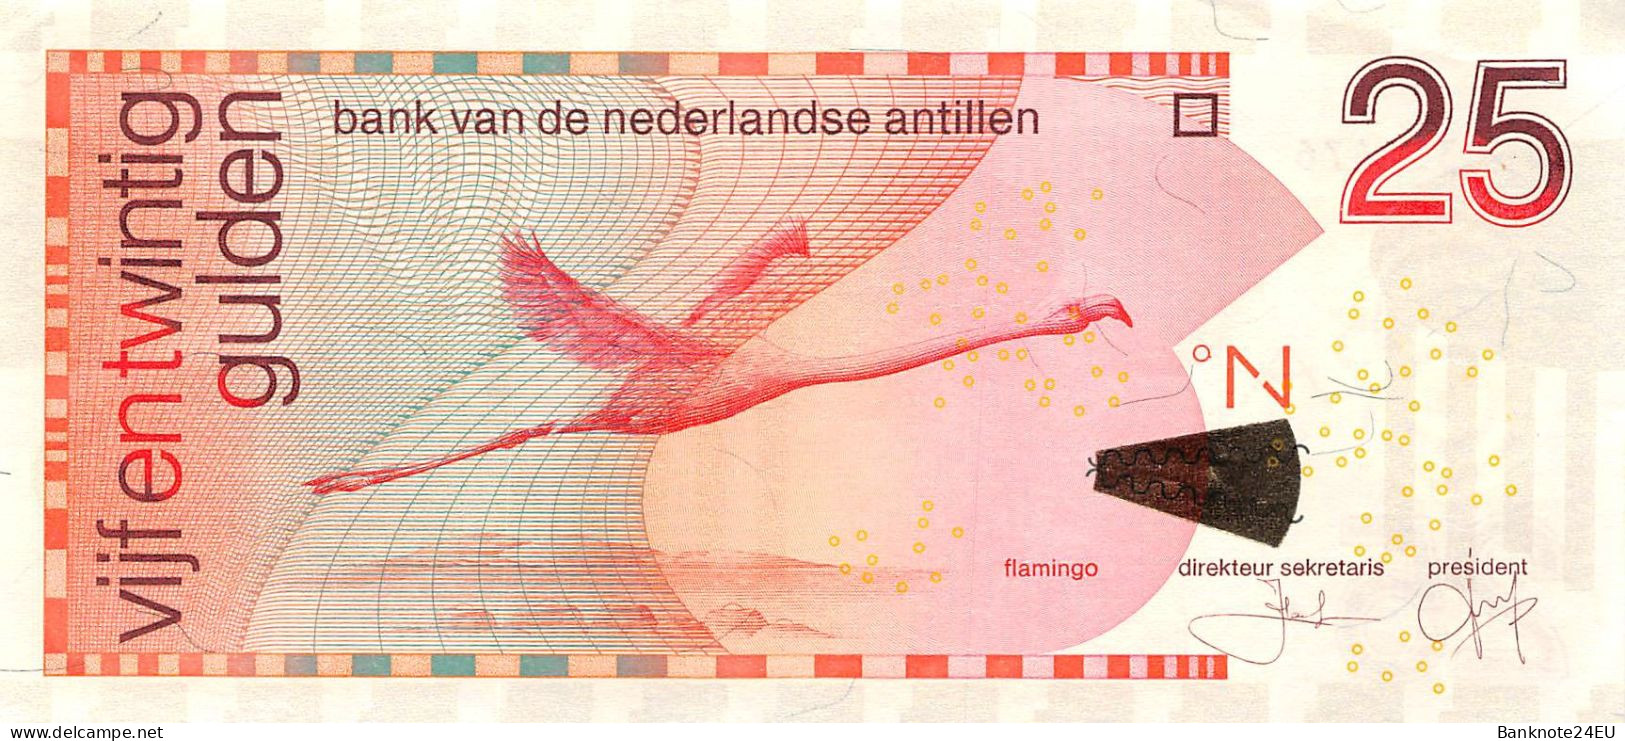 Netherlands Antilles 25 Gulden 2011 Xf Pn 29f Serienumber 4150351476 - Antillas Neerlandesas (...-1986)